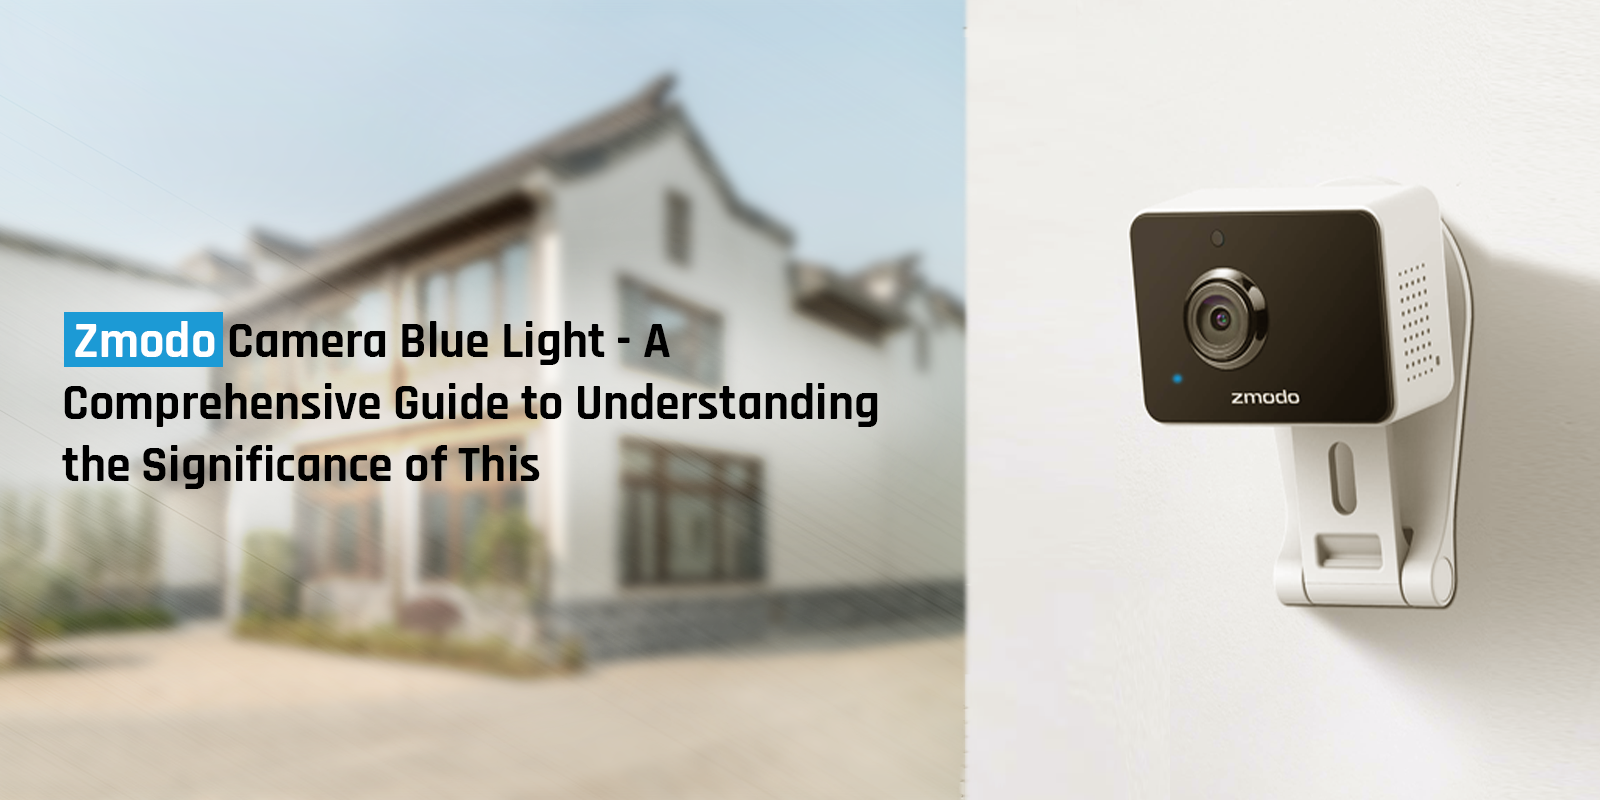 Zmodo Camera Blue Light: Everything You Need to Know